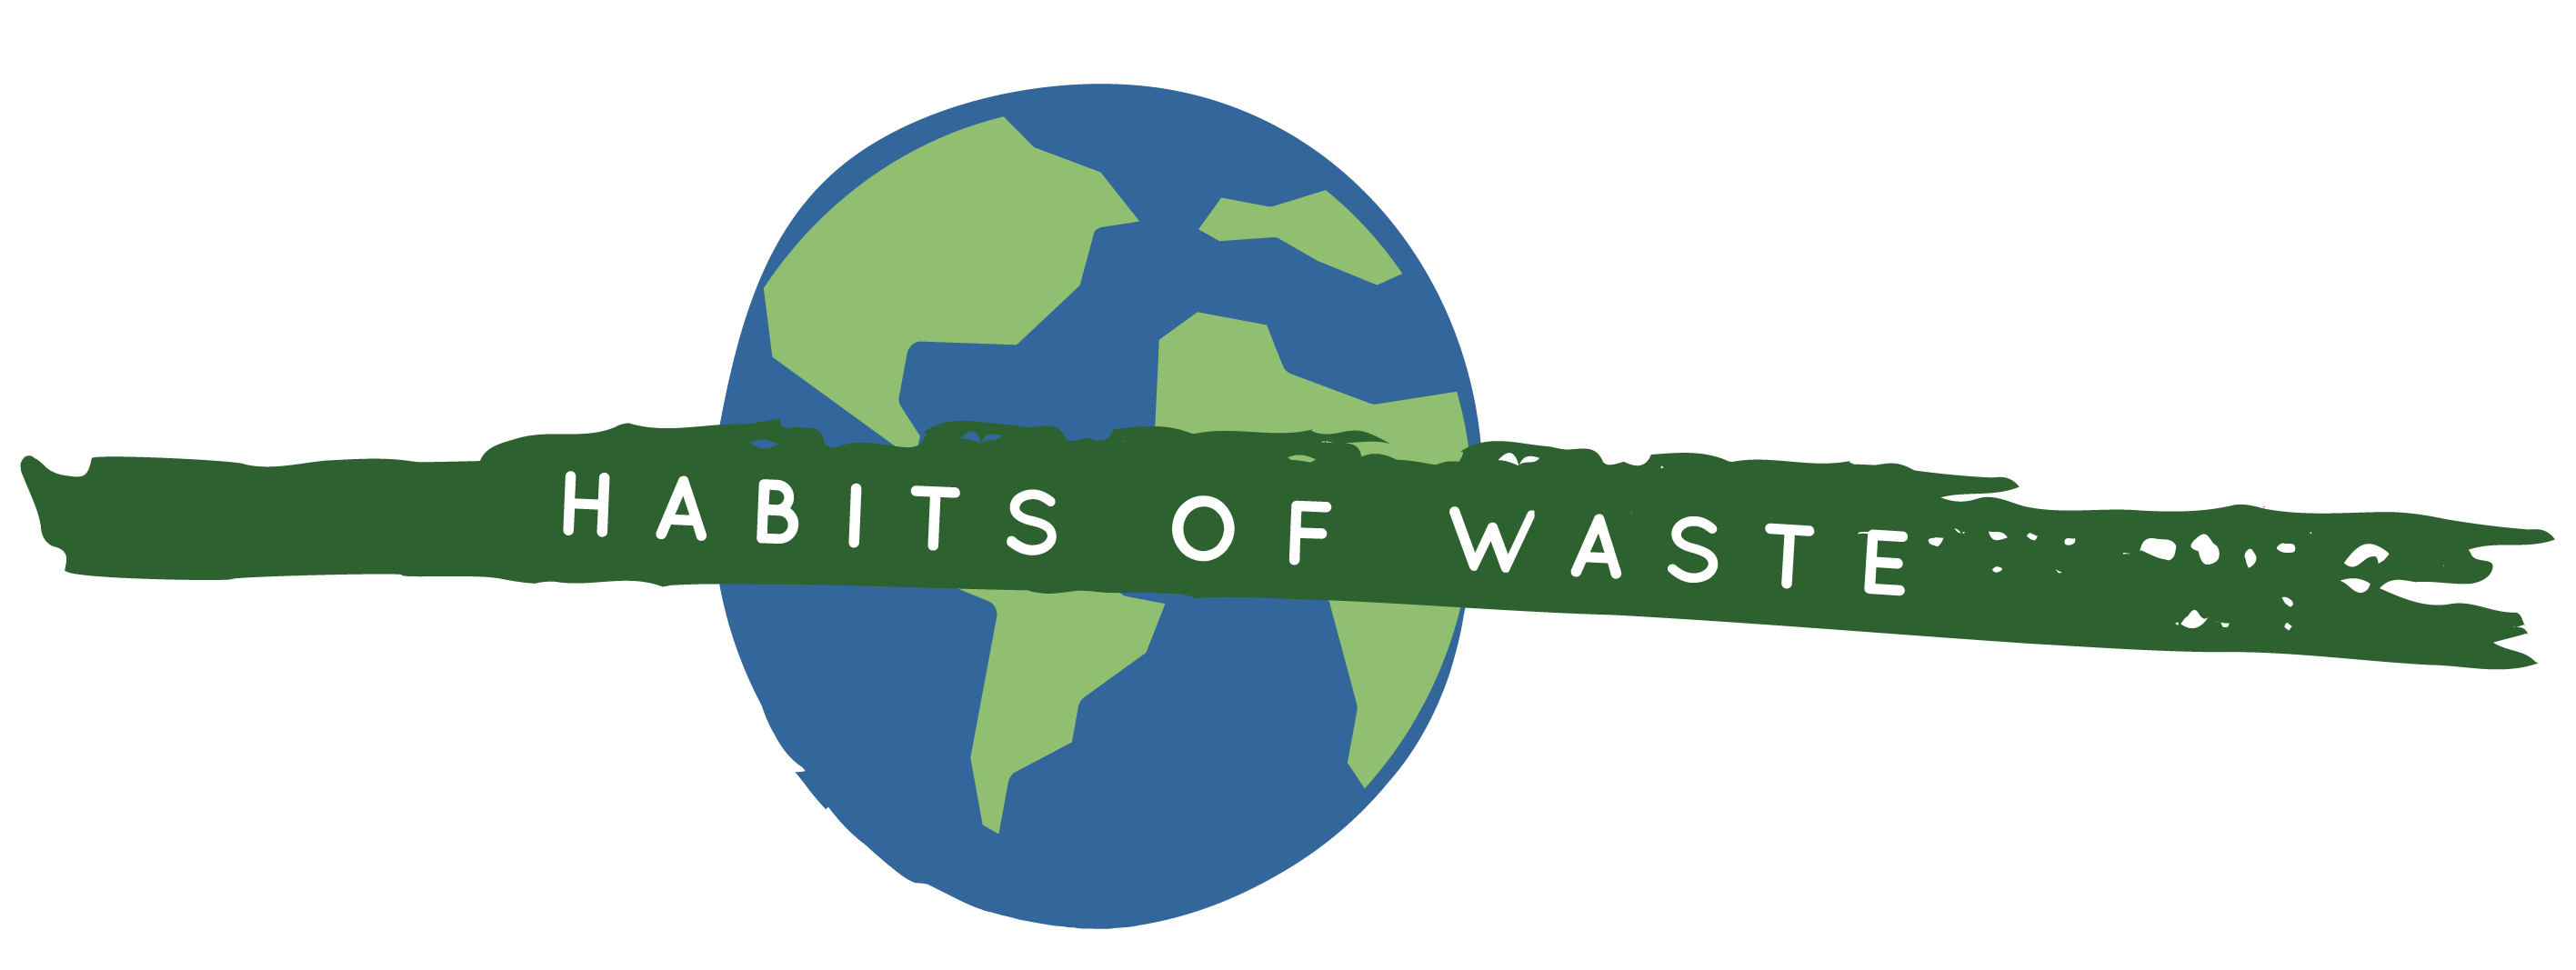 Habits of Waste